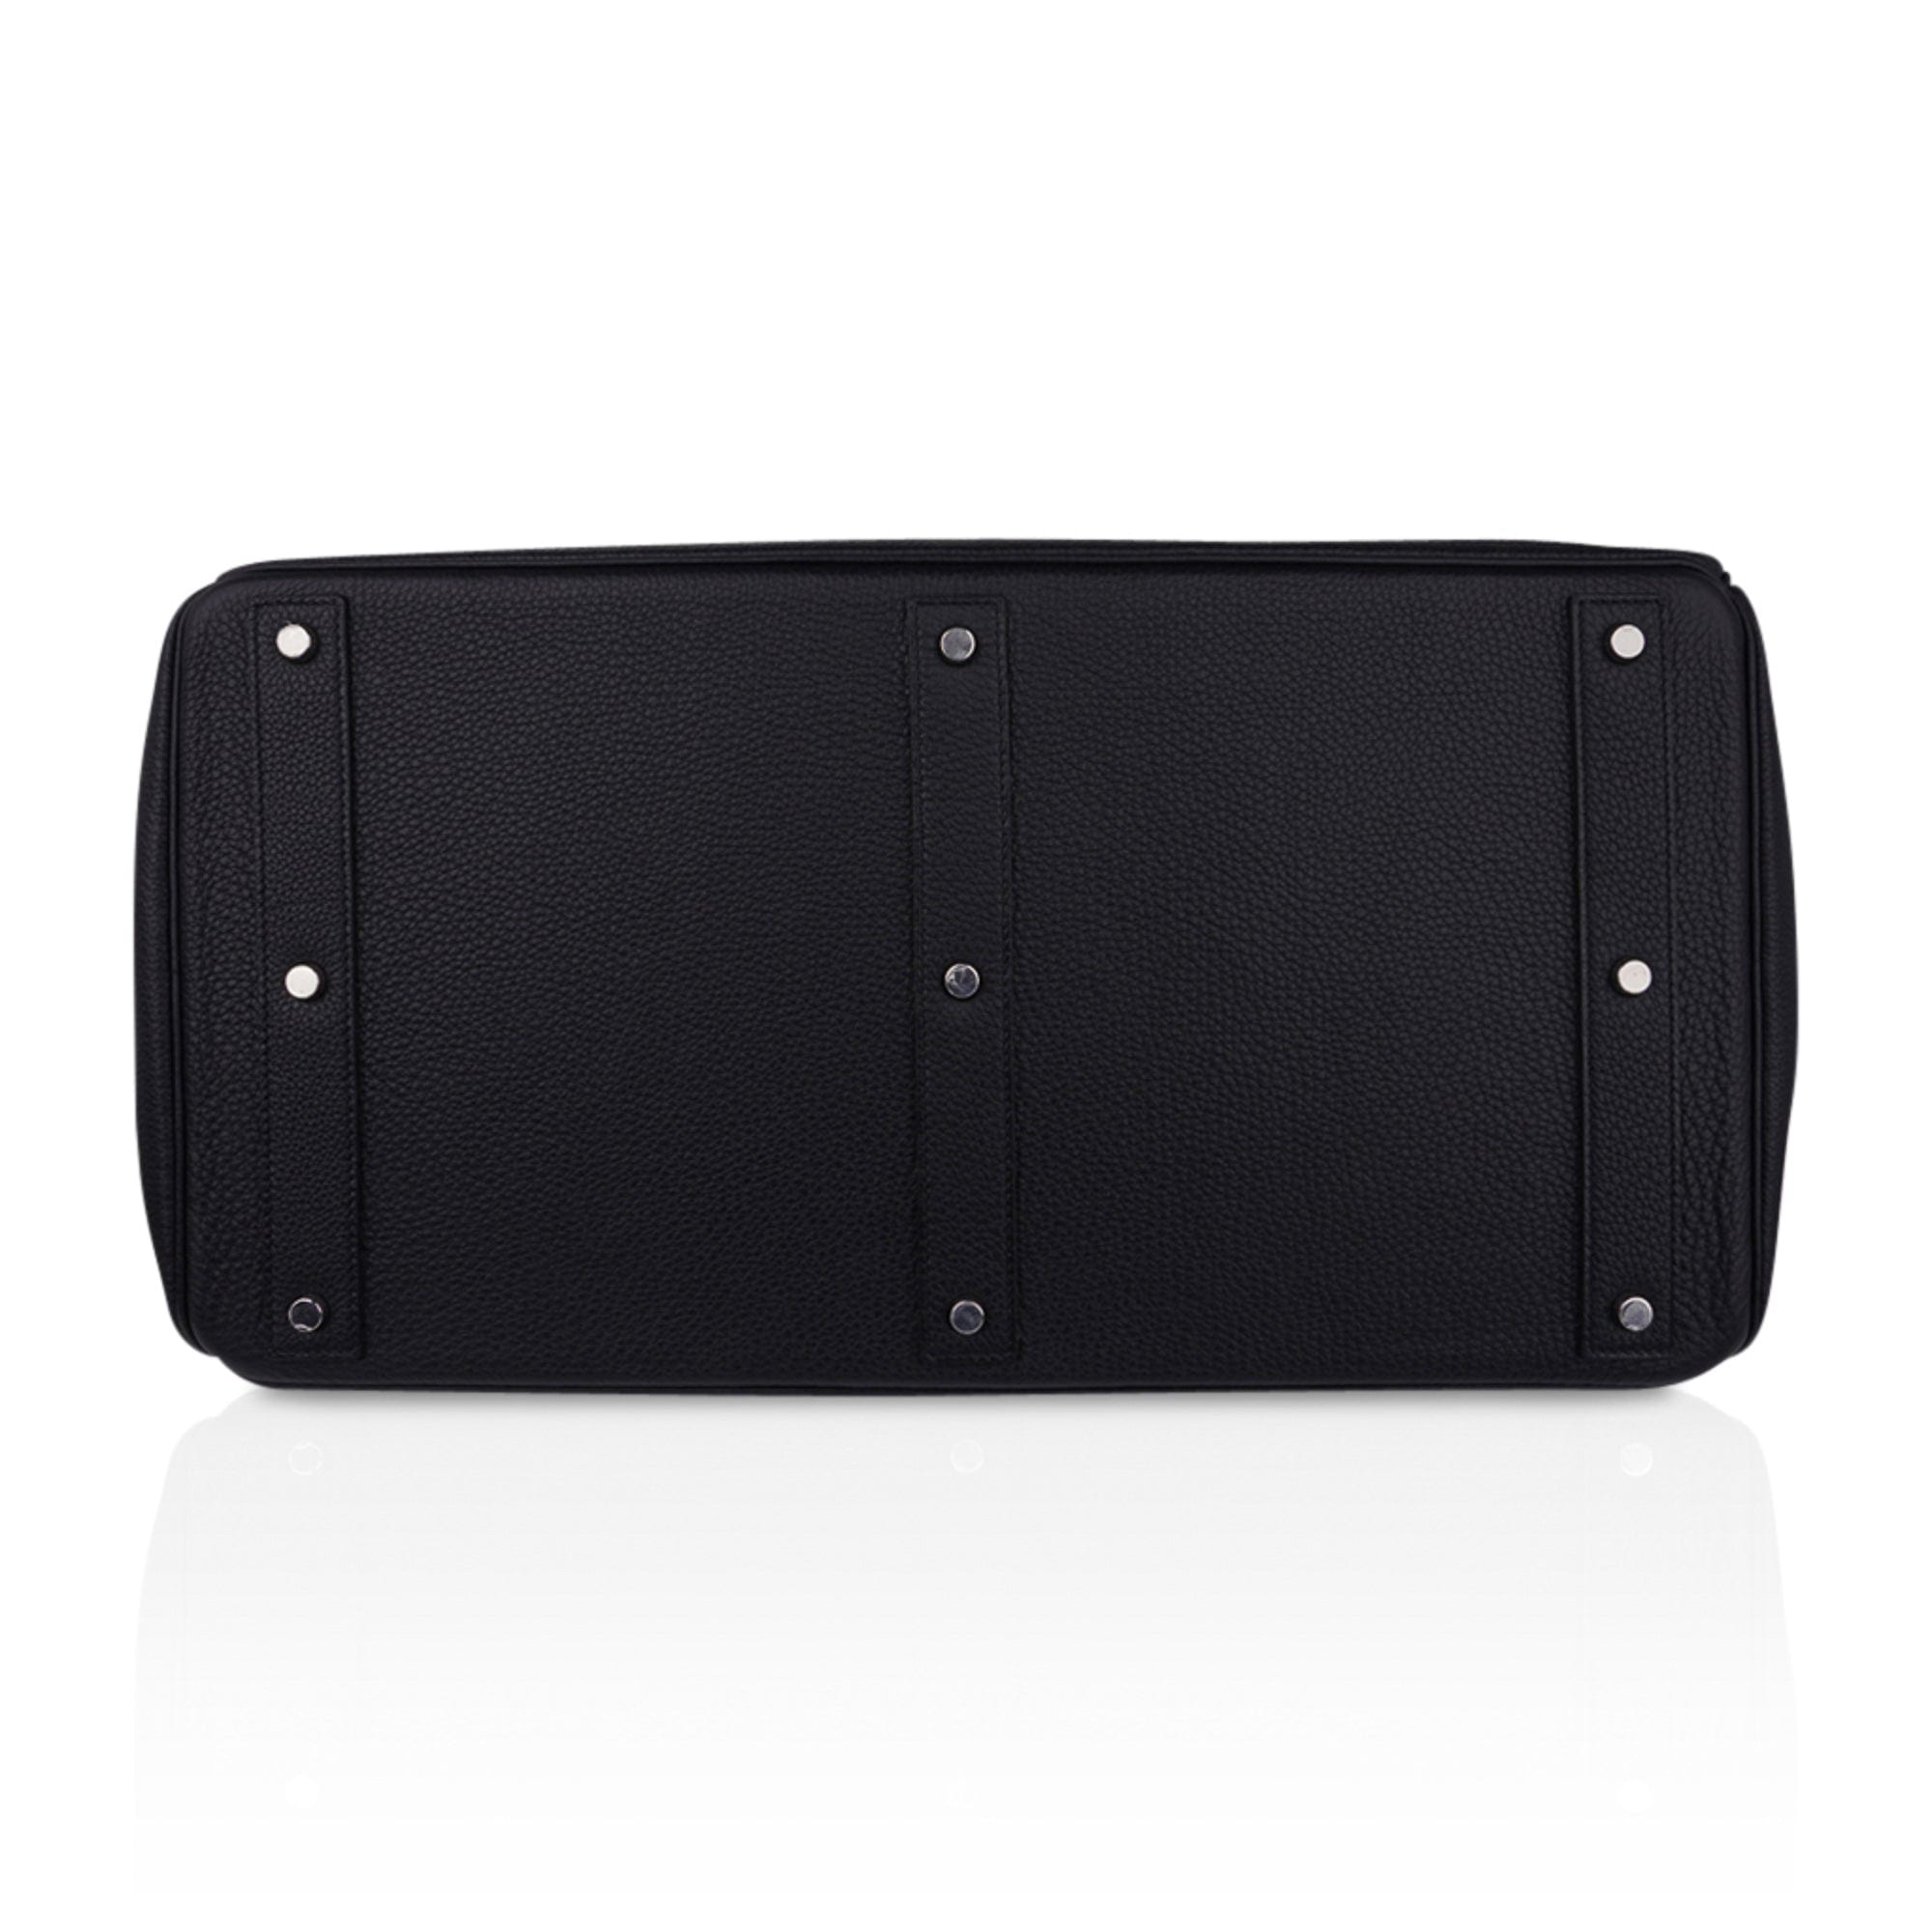 Hermes HAC 50 Birkin Bag Black Palladium Hardware Togo Leather • MIGHTYCHIC  • 